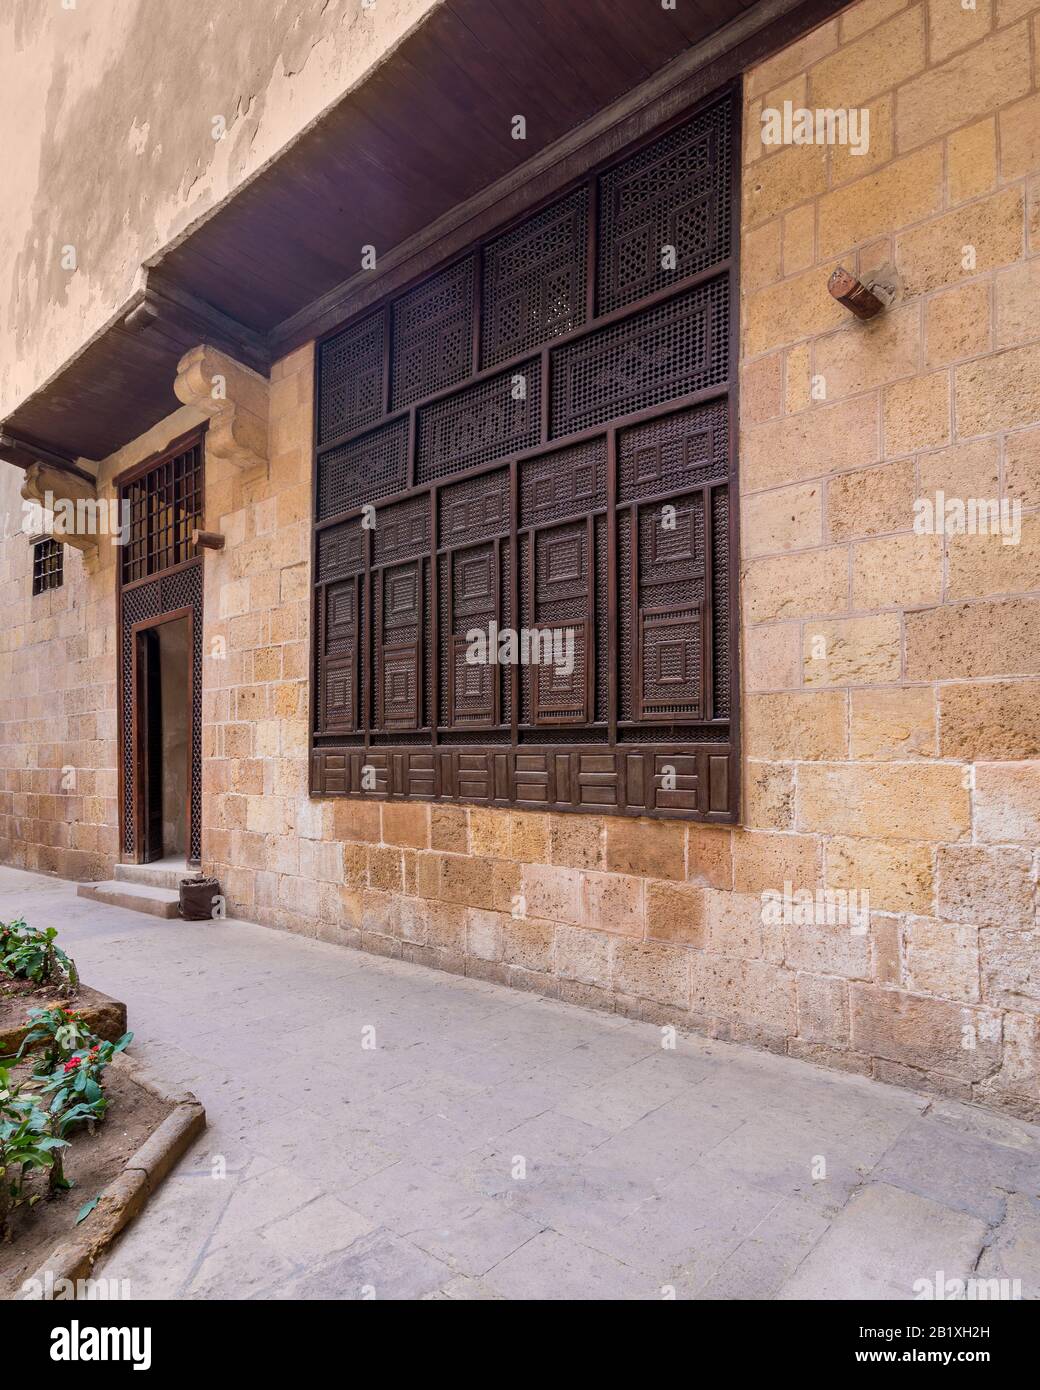 Wooden arabesque window, Mashrabiya, and door in exterior stone bricks wall of ottoman era old historic El Sehemy building, Moez Street, Cairo, Egypt Stock Photo